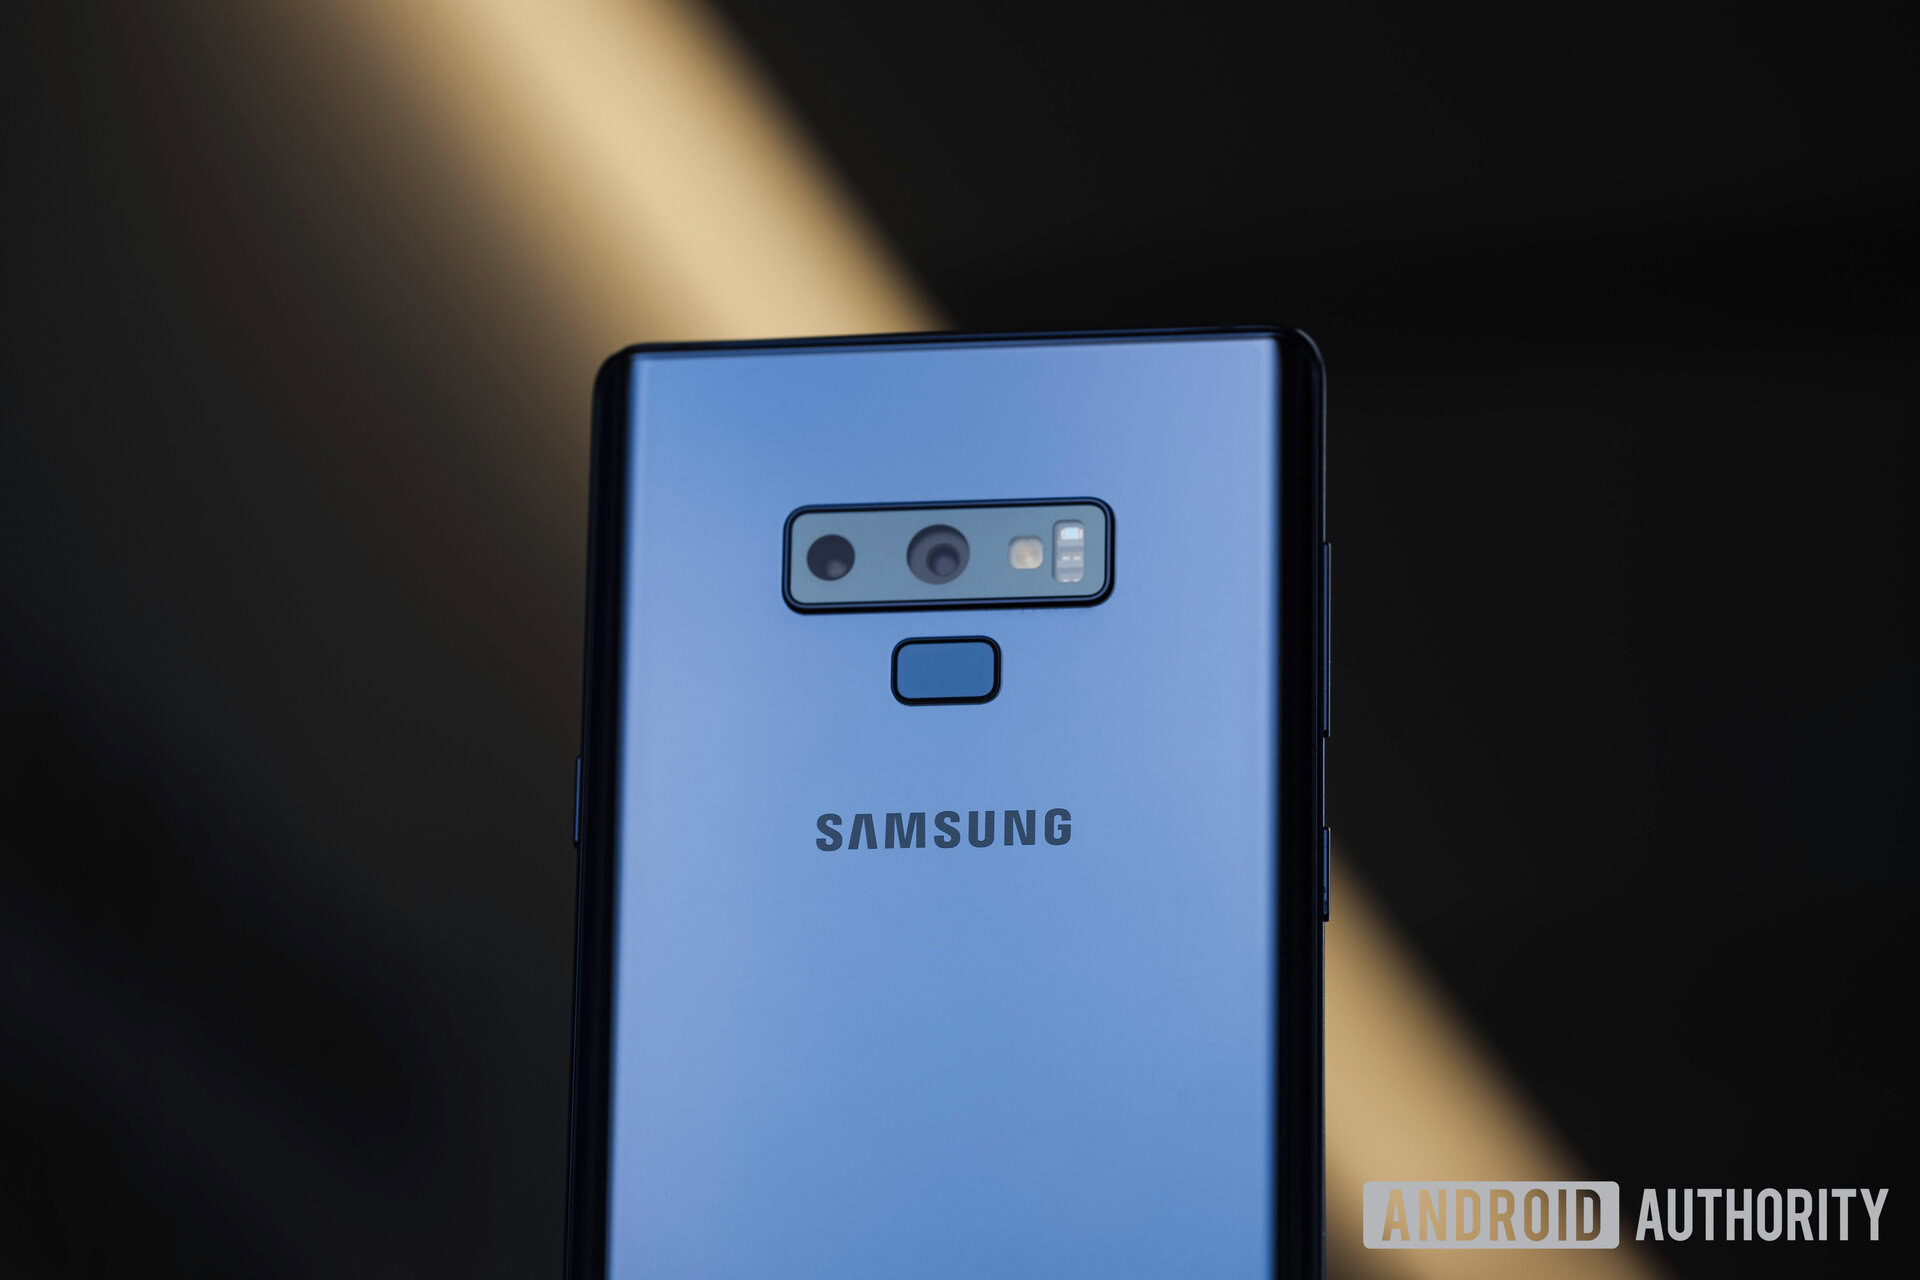  Samsung Galaxy Note 9, 128GB, Ocean Blue - Unlocked